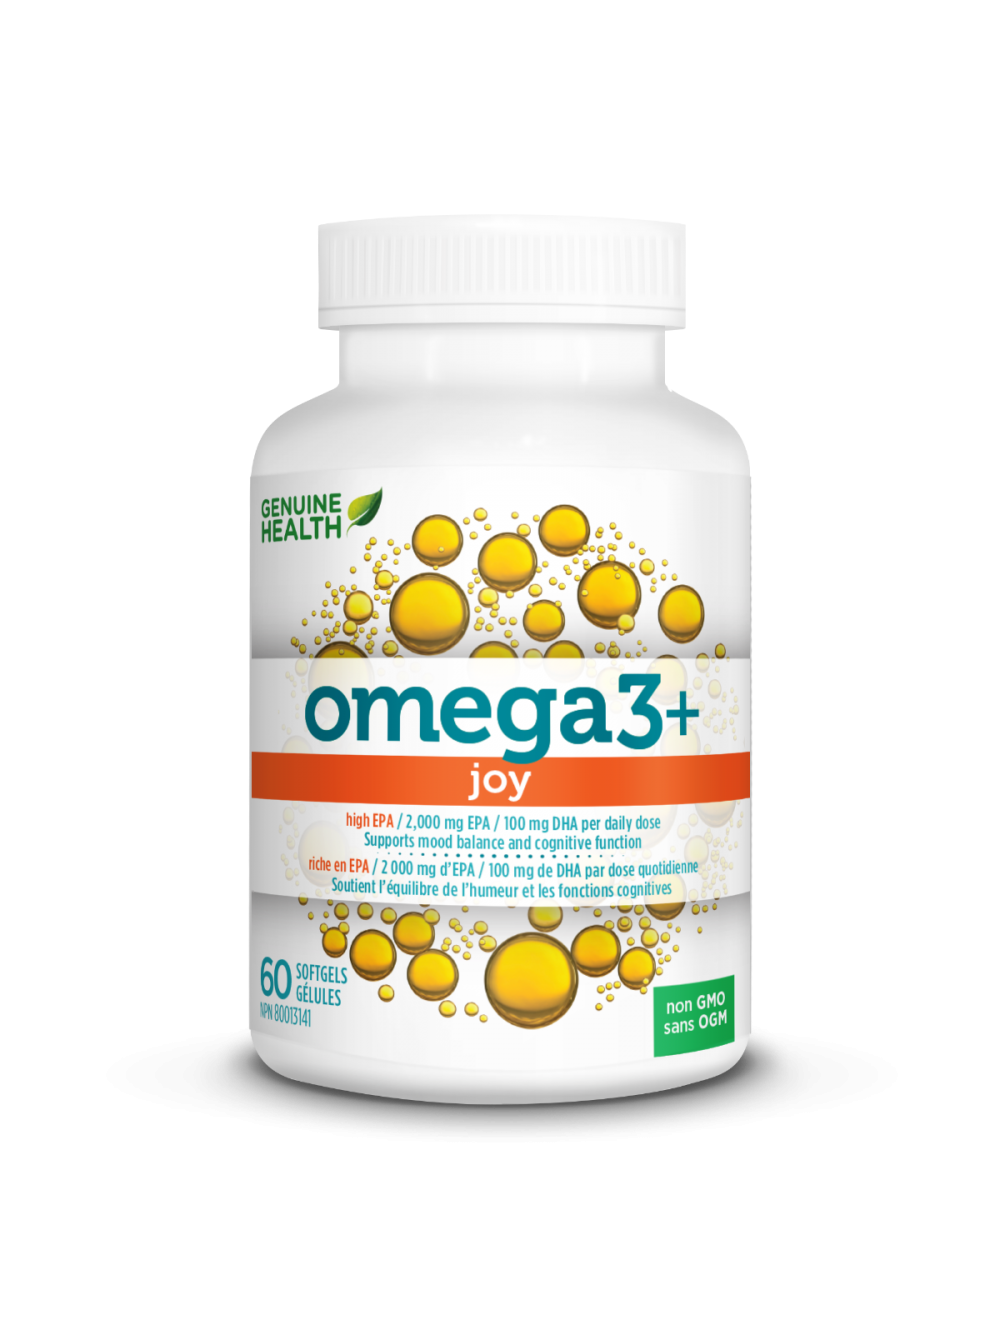 Genuine Health omega3+ JOY-2